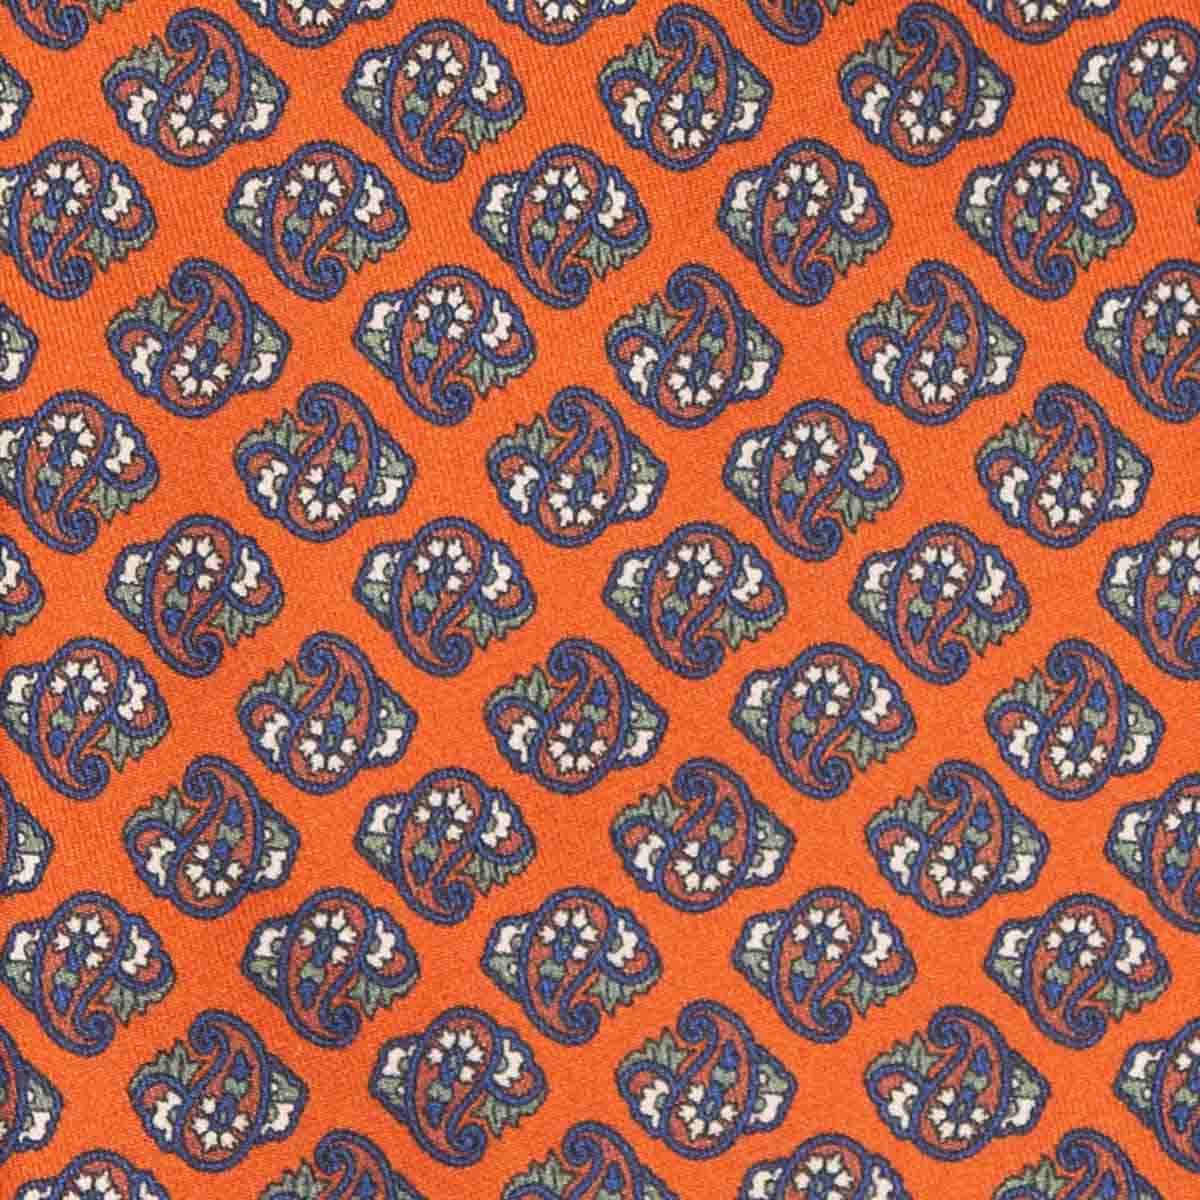 Orange & Navy Paisley Pattern Silk Tie Serà Fine Silk